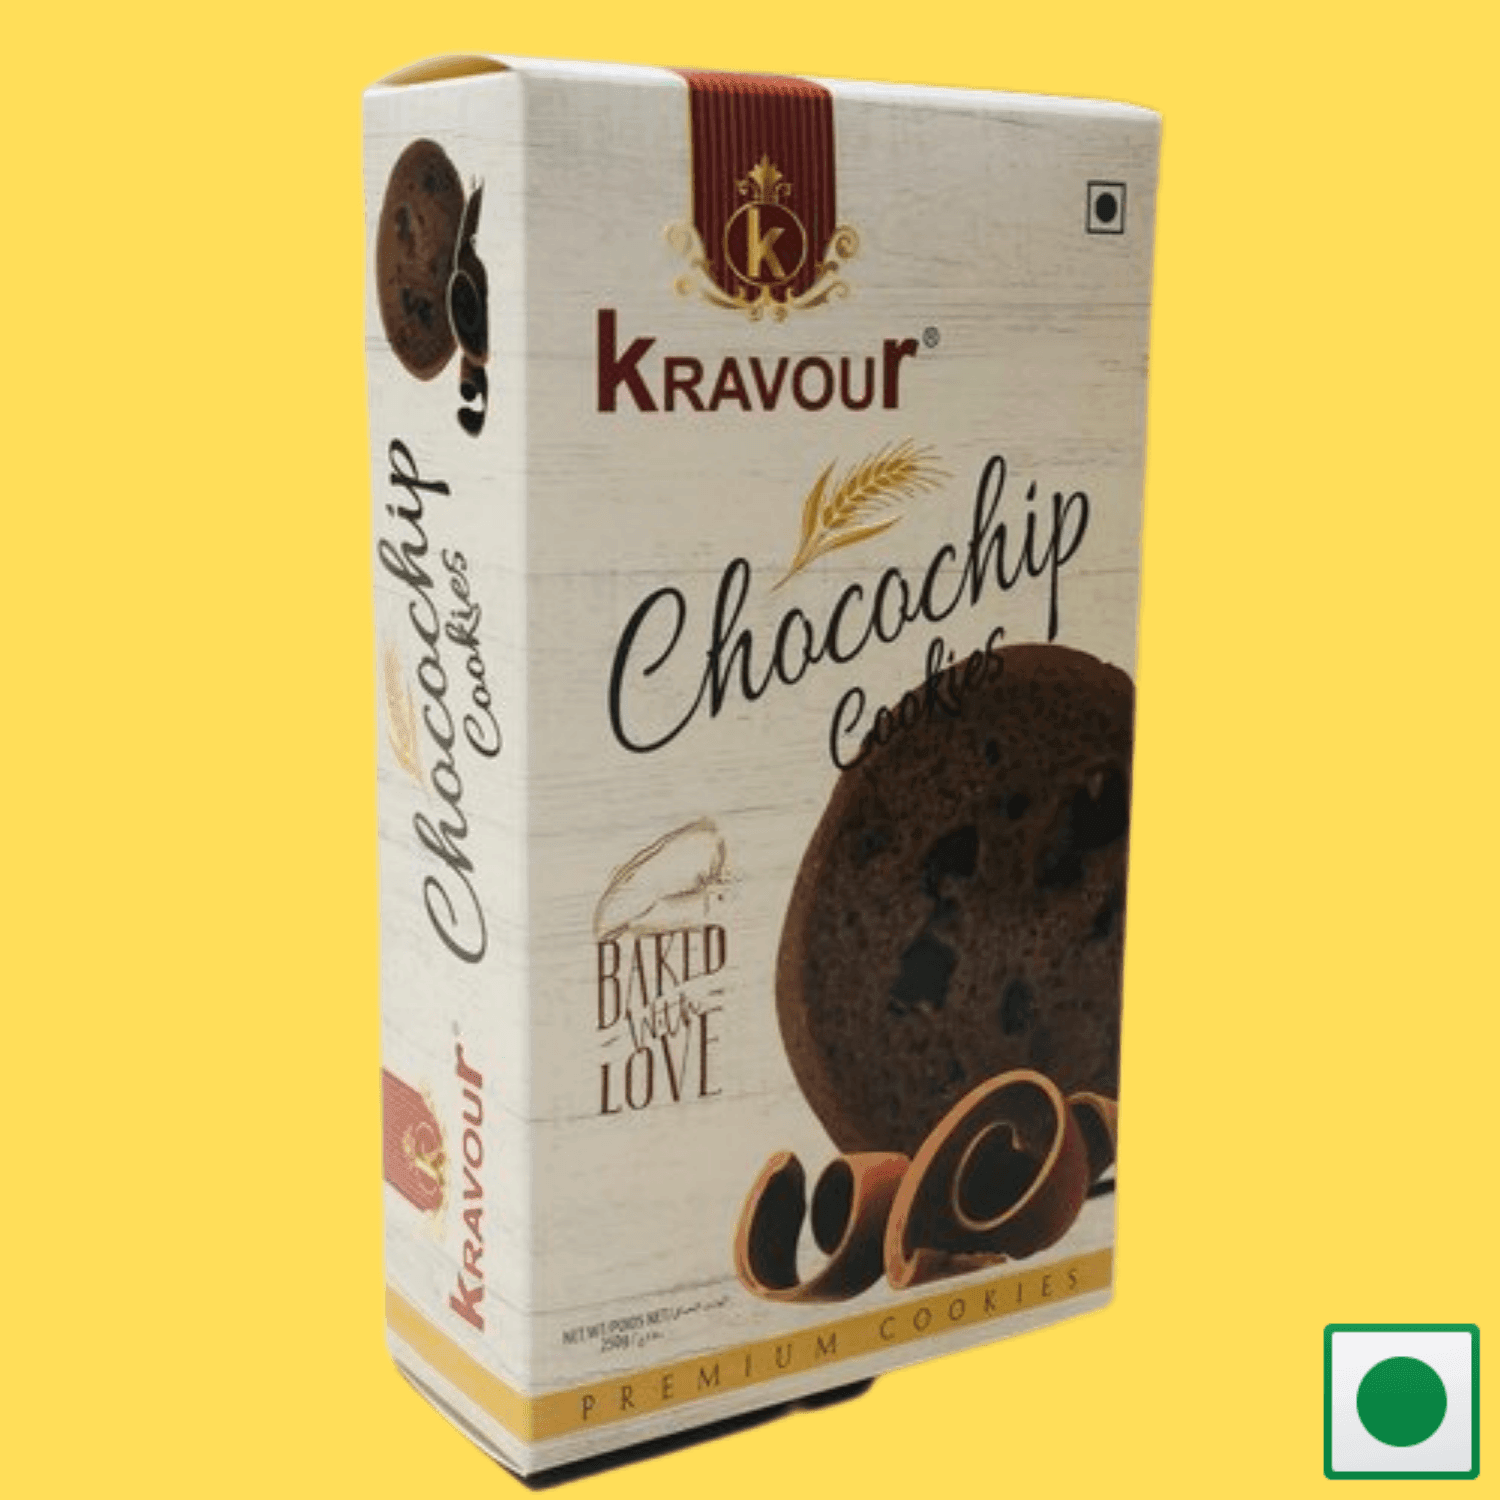 Kravour Chocochip Cookies, 250g - Super 7 Mart